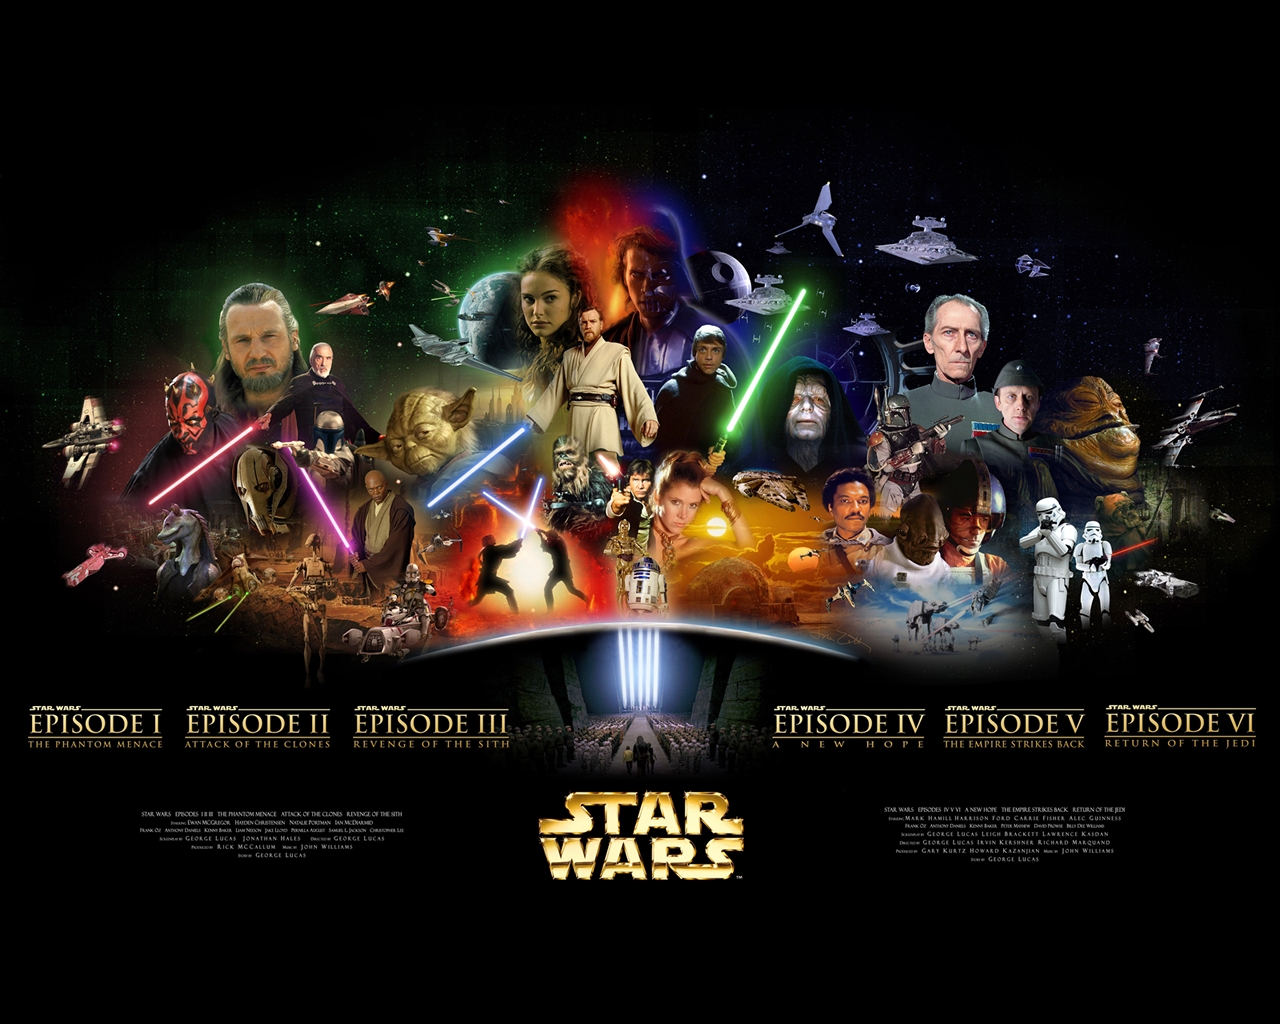 "Star Wars" movie poster desktop wallpaper (1280 x 1024 pixels)